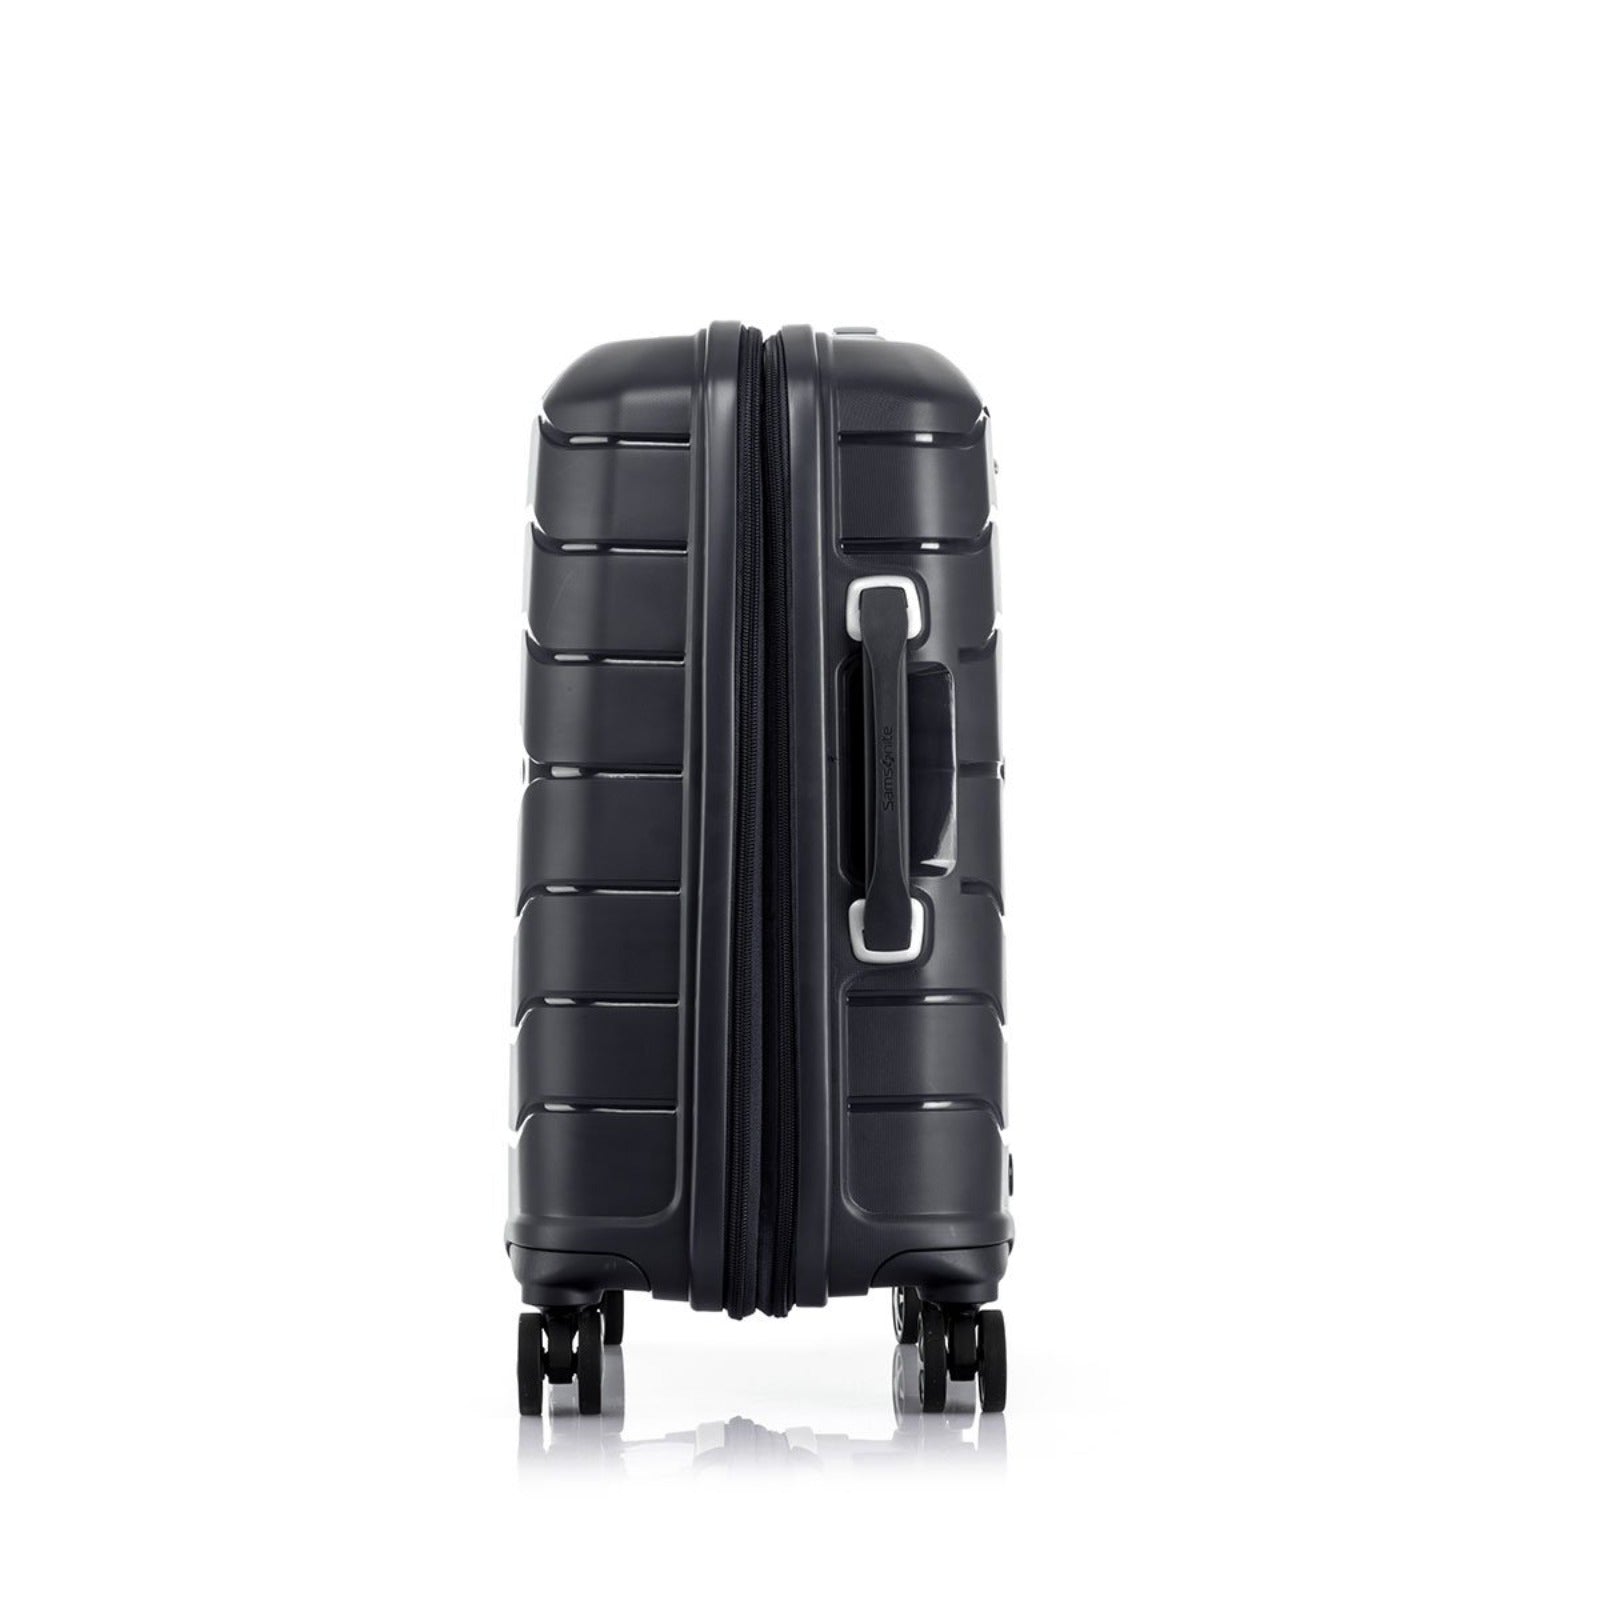 Samsonite_Oc2lite_55cm_Carry-On_Suitcase_Black_Side